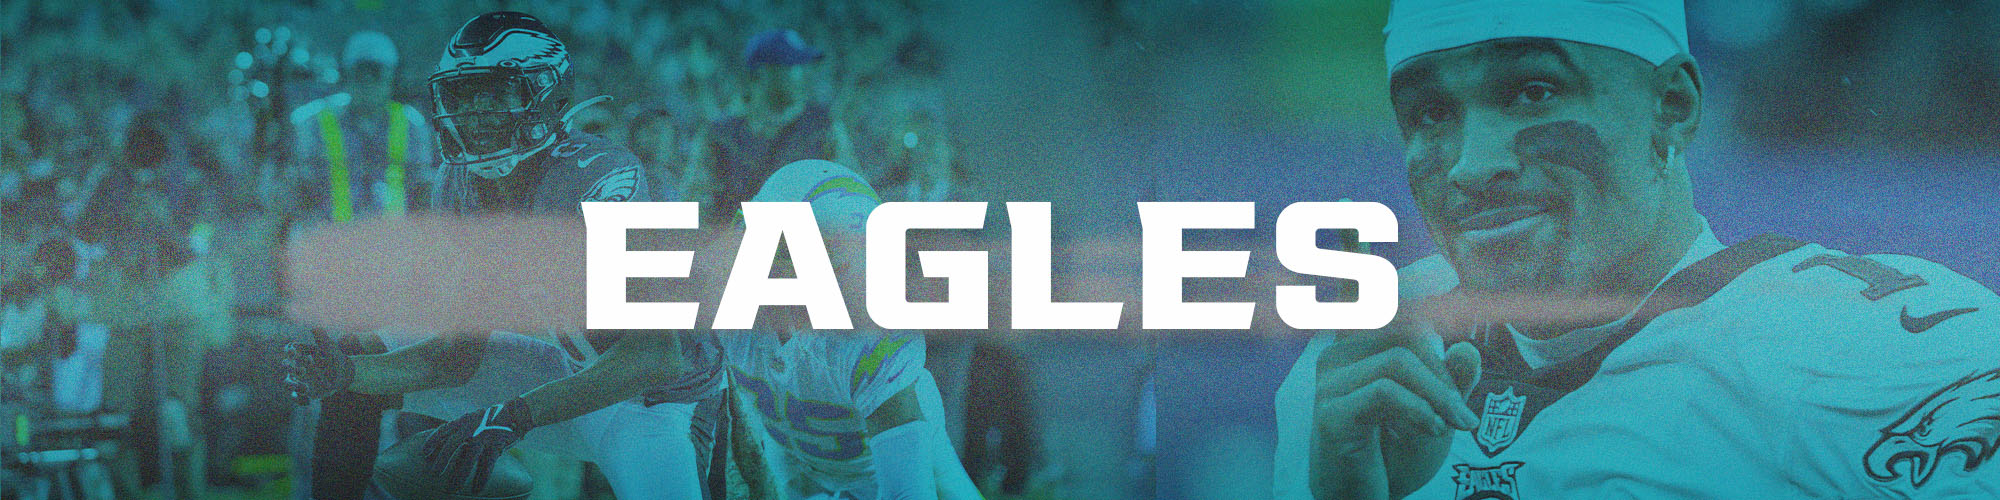 Philadelphia Eagles Football - Eagles News, Scores, Stats, Rumors